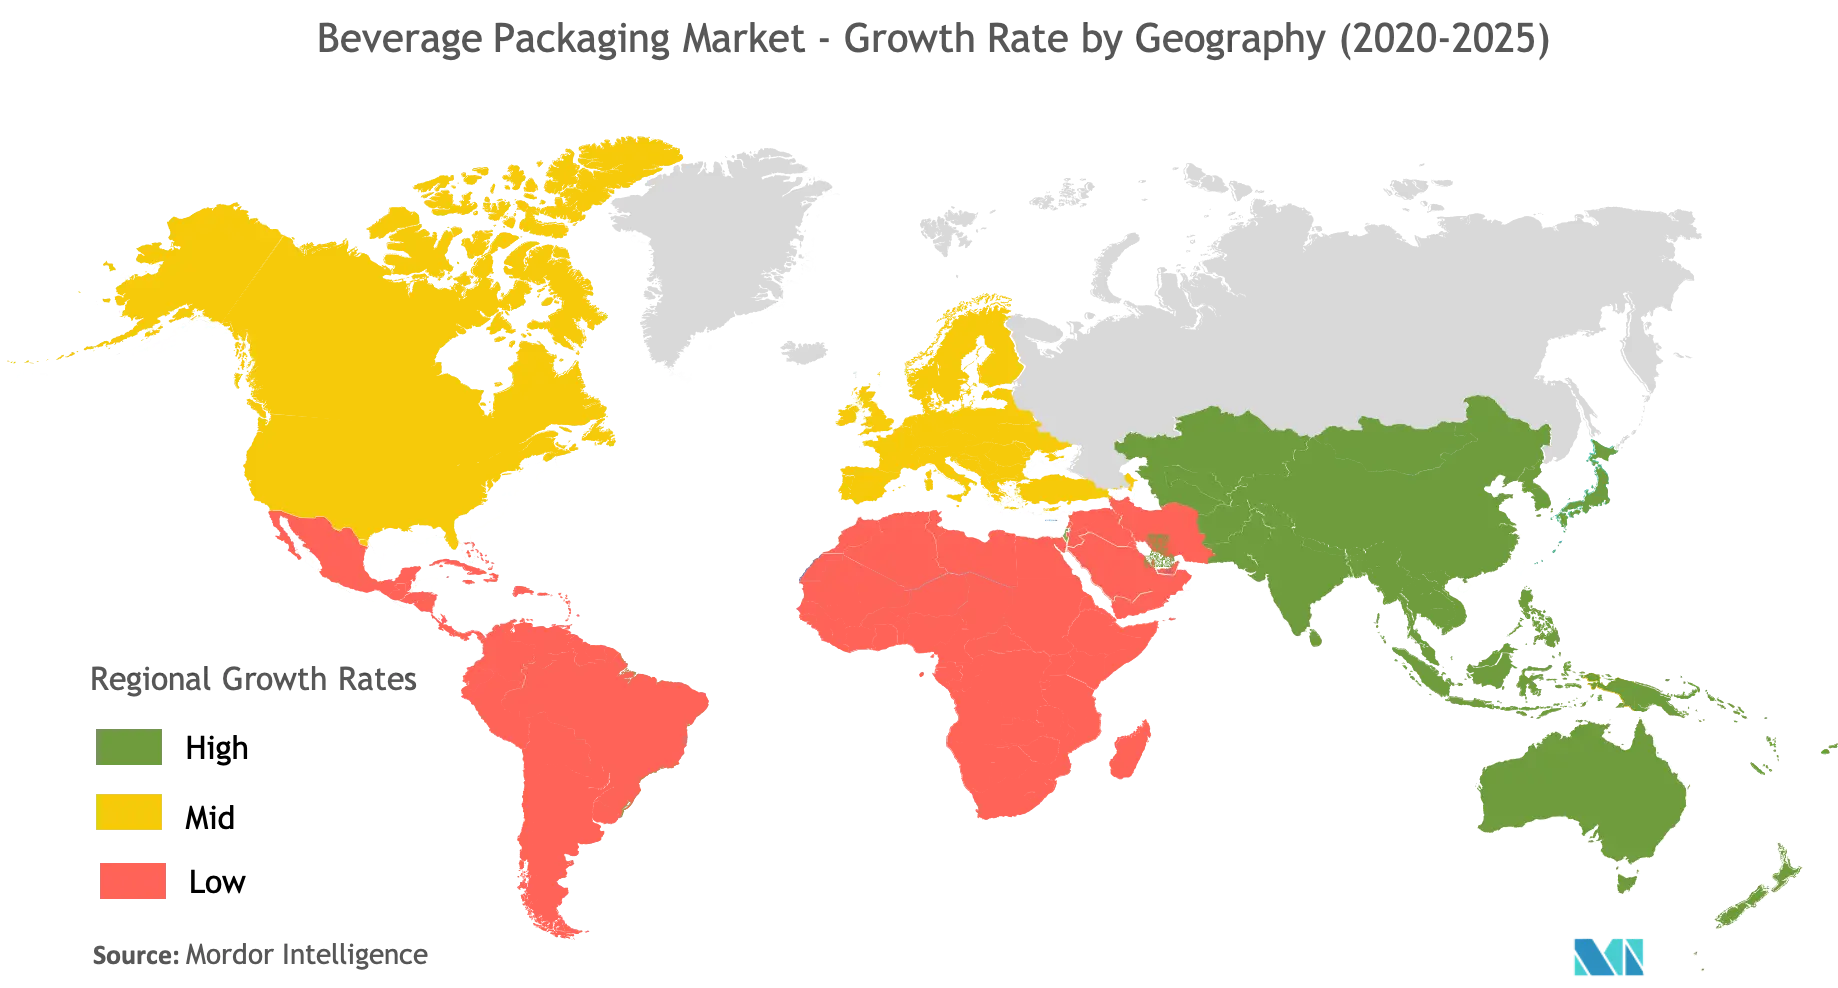 Beverage Packaging Market Growth Rate By Region